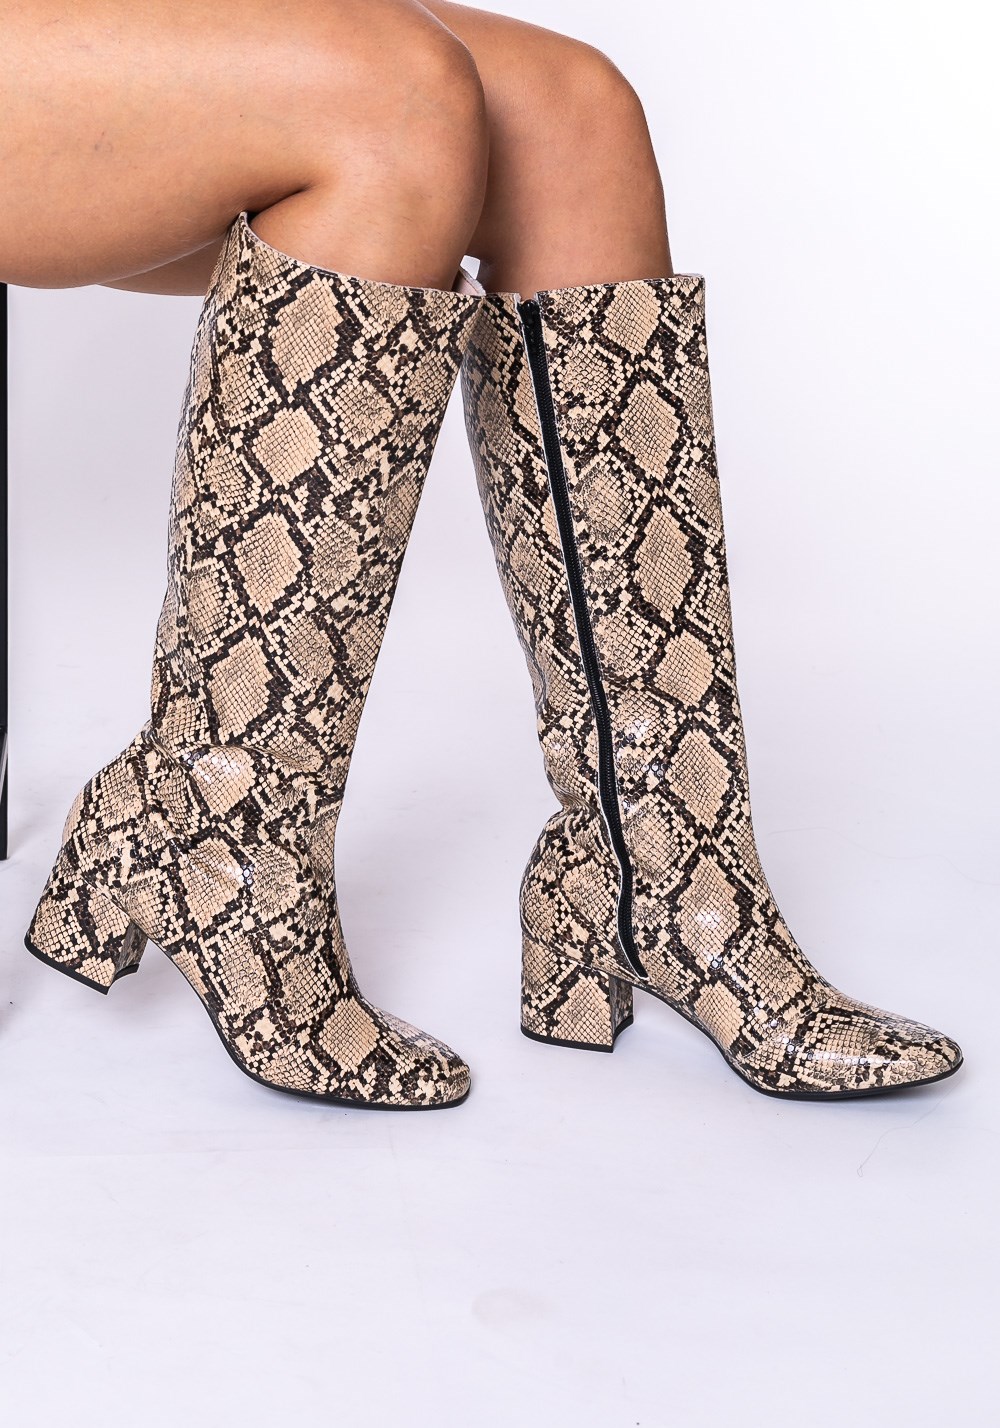 Bota modelo skin shoes texturizada animal print cobra